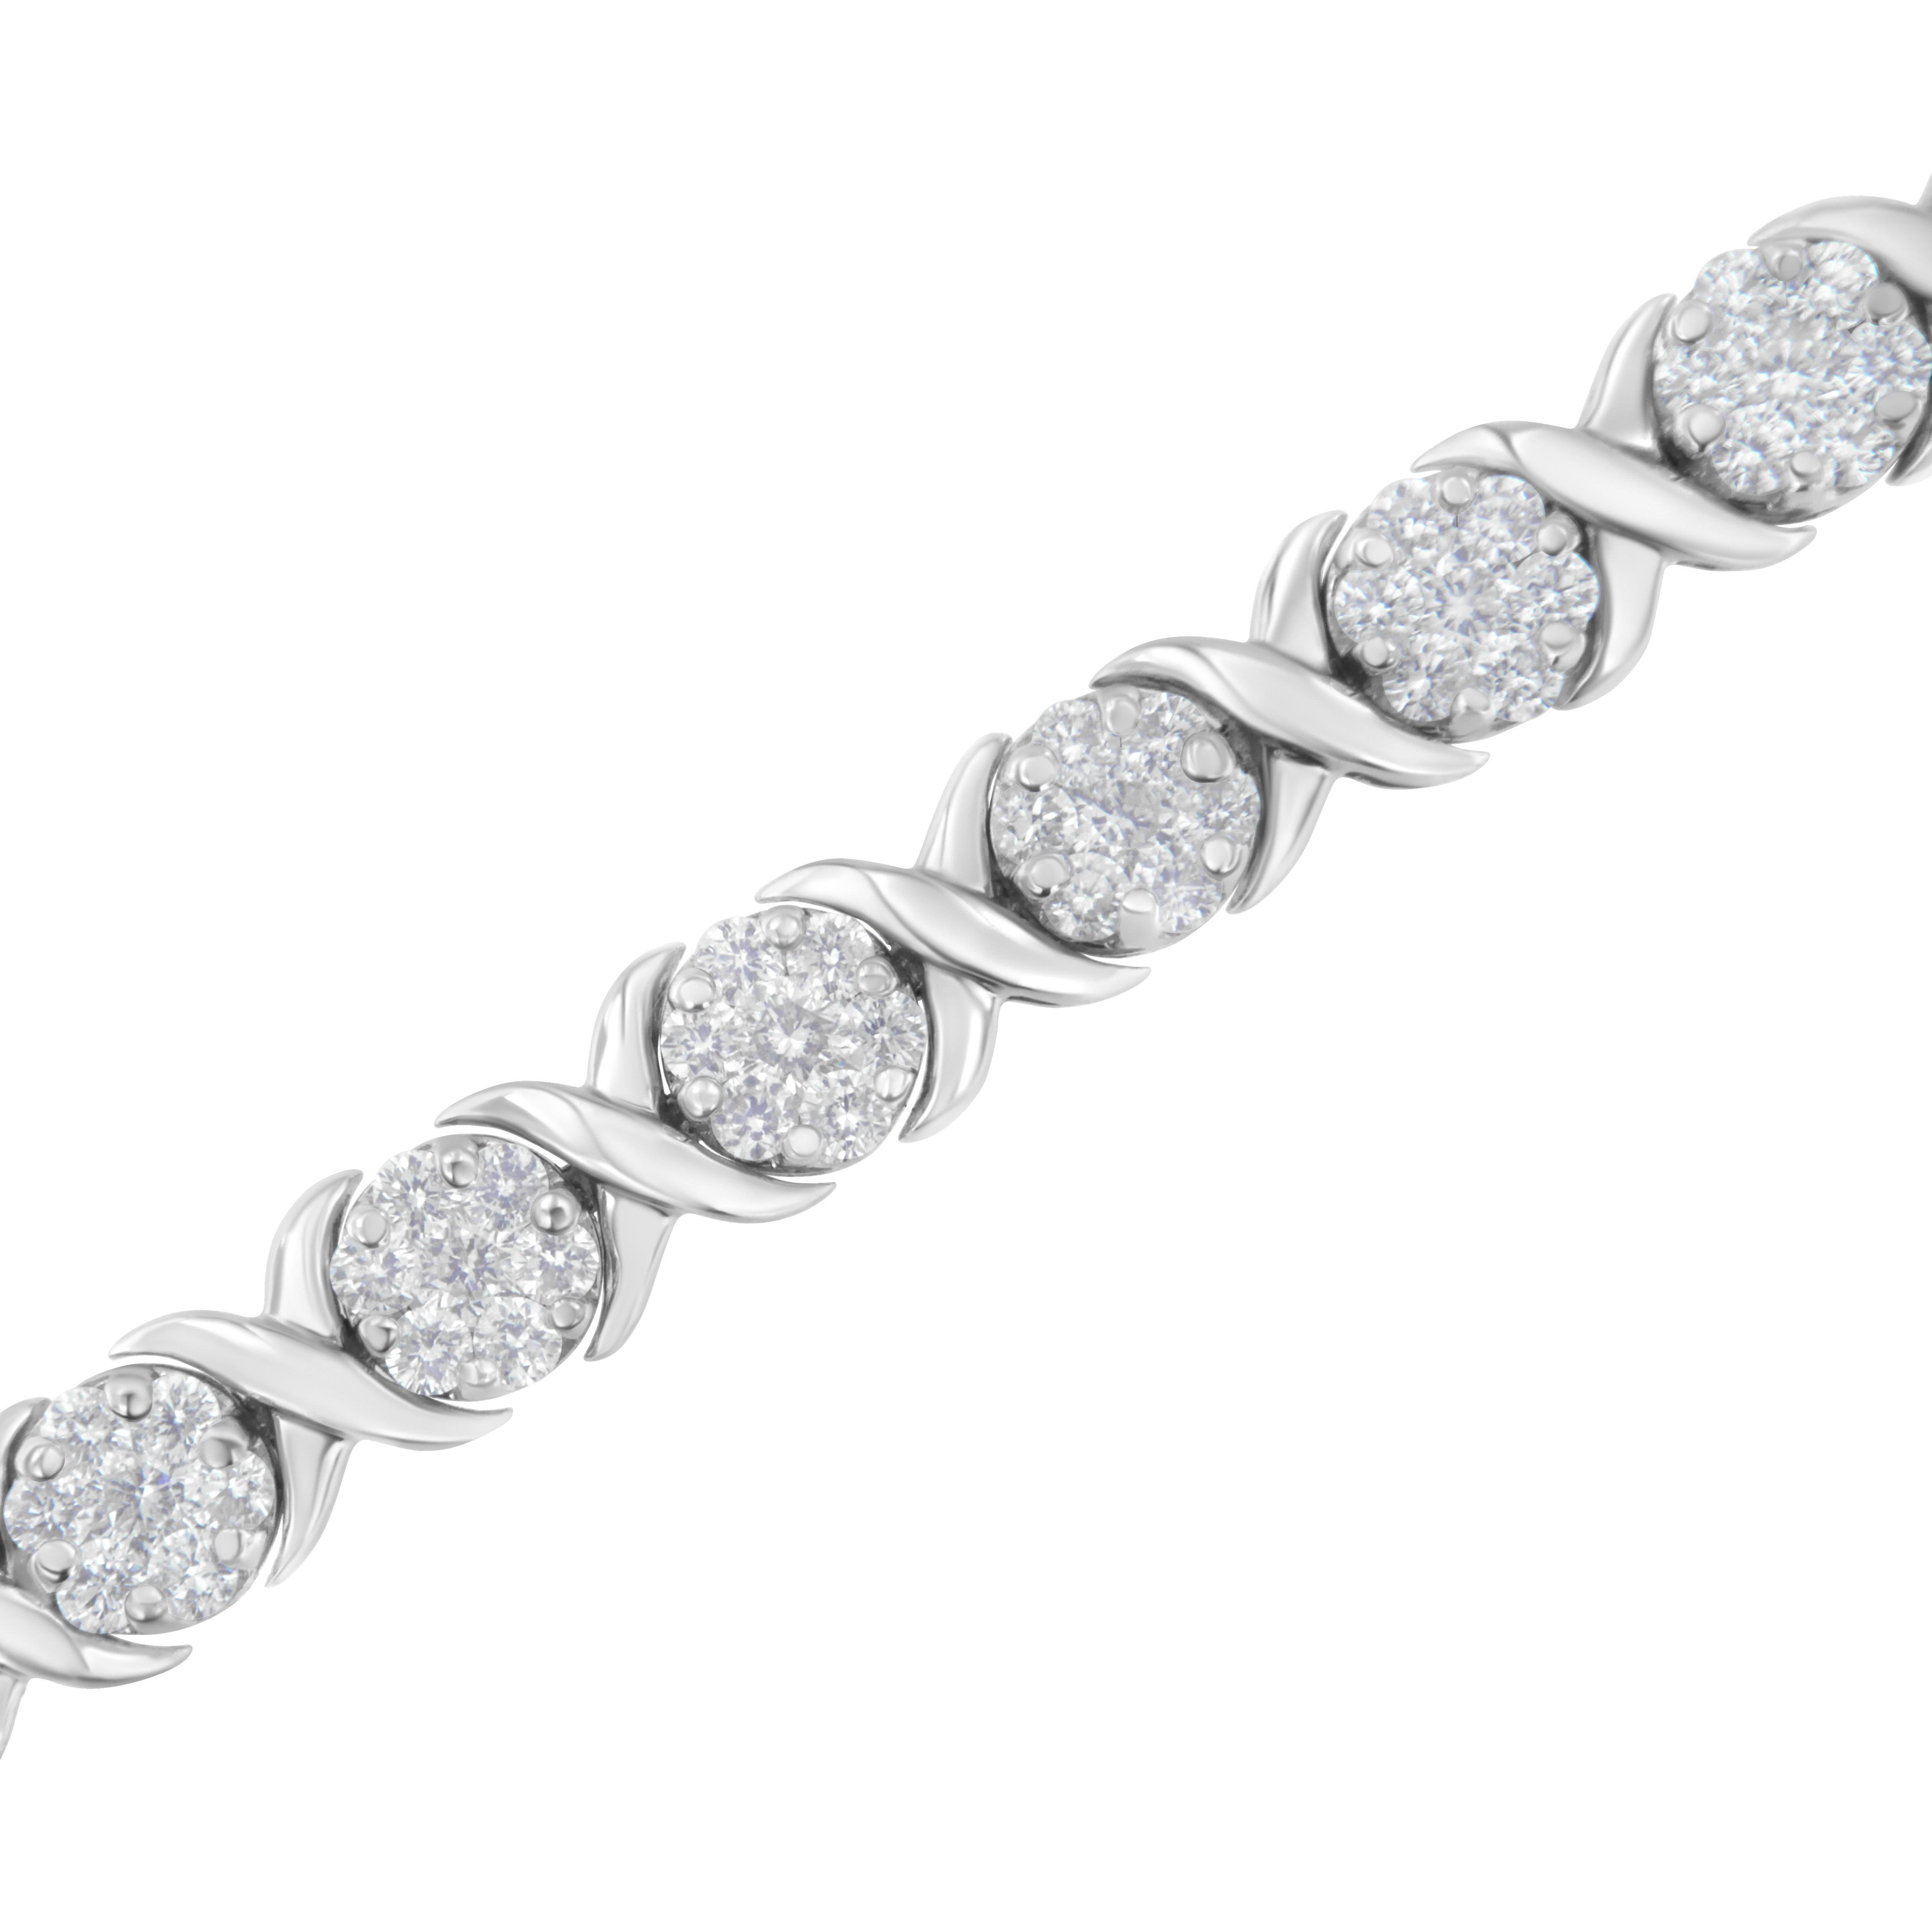 6 carat tennis bracelet price